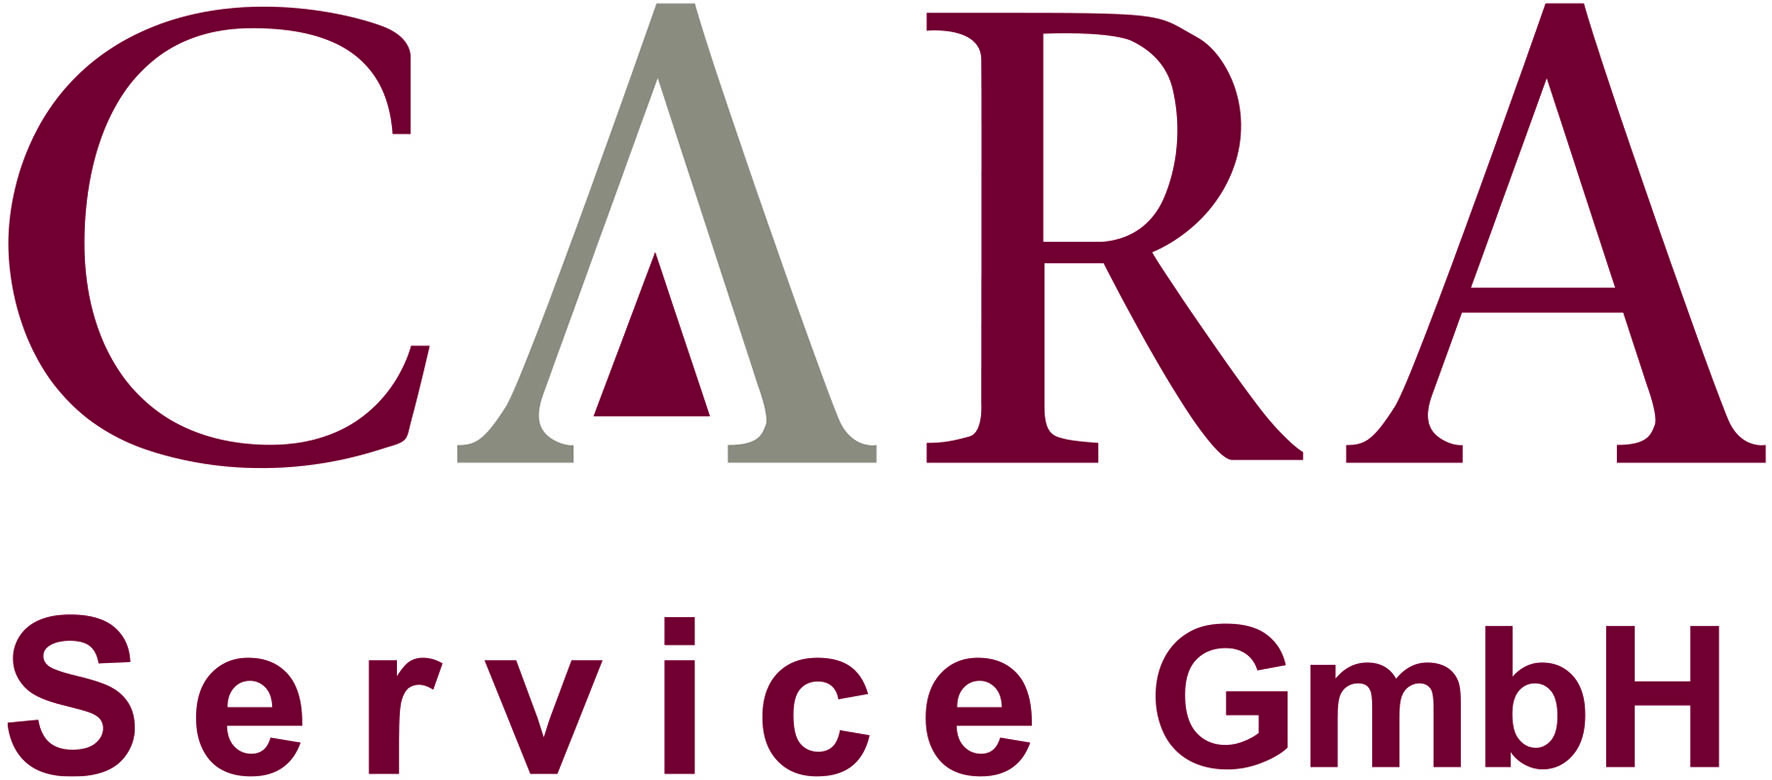 CARA Service GmbH